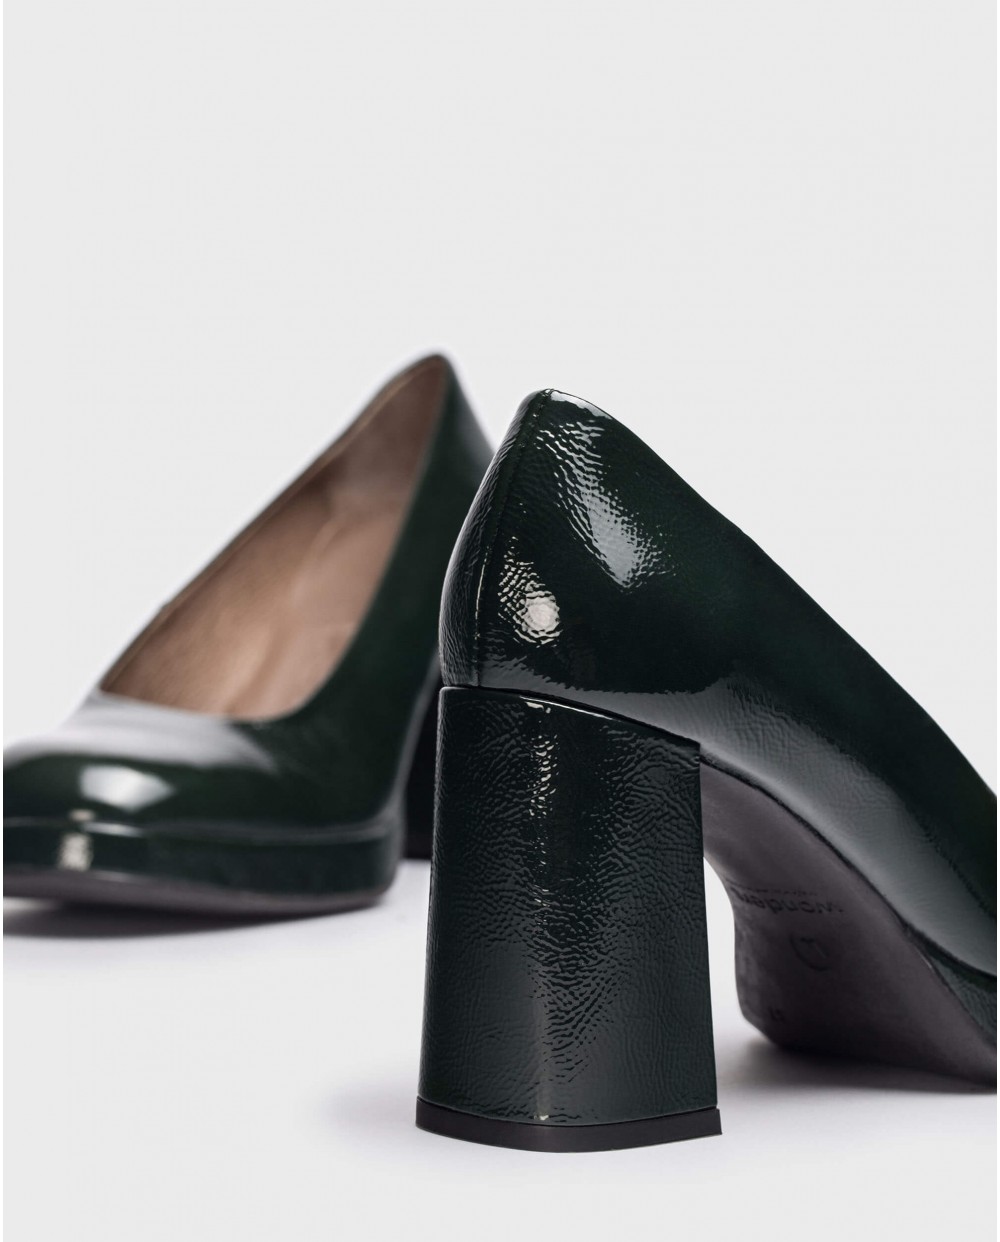 Wonders-Heels-Green CAPTAIN high-heeled shoe